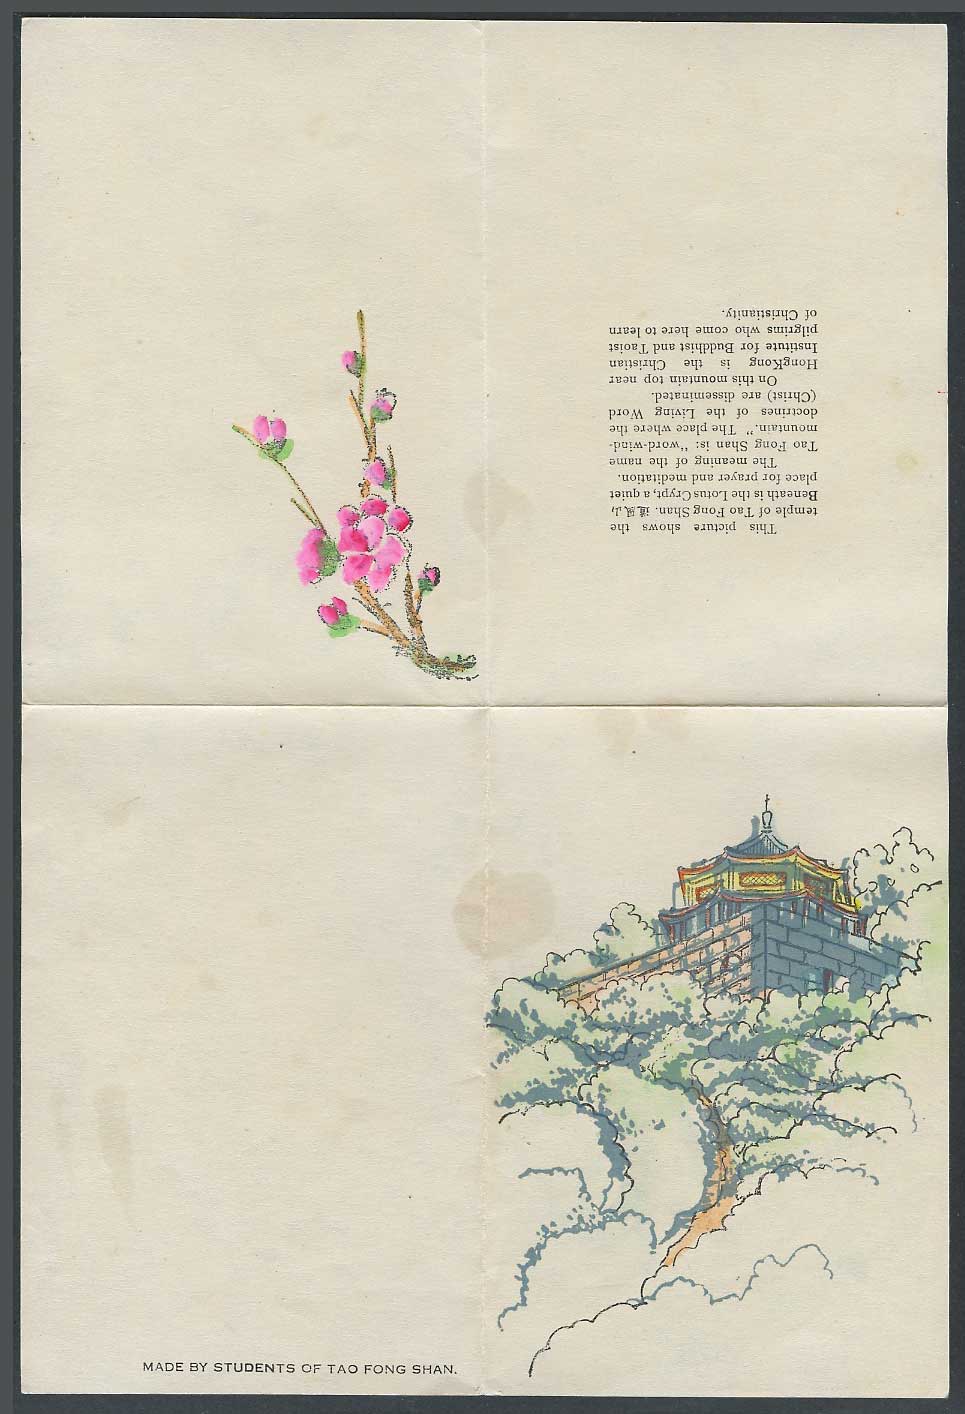 Hong Kong Art Drawn Hand Tinted Drawings Tao Fong Shan Temple Pagoda Flowers 道風山